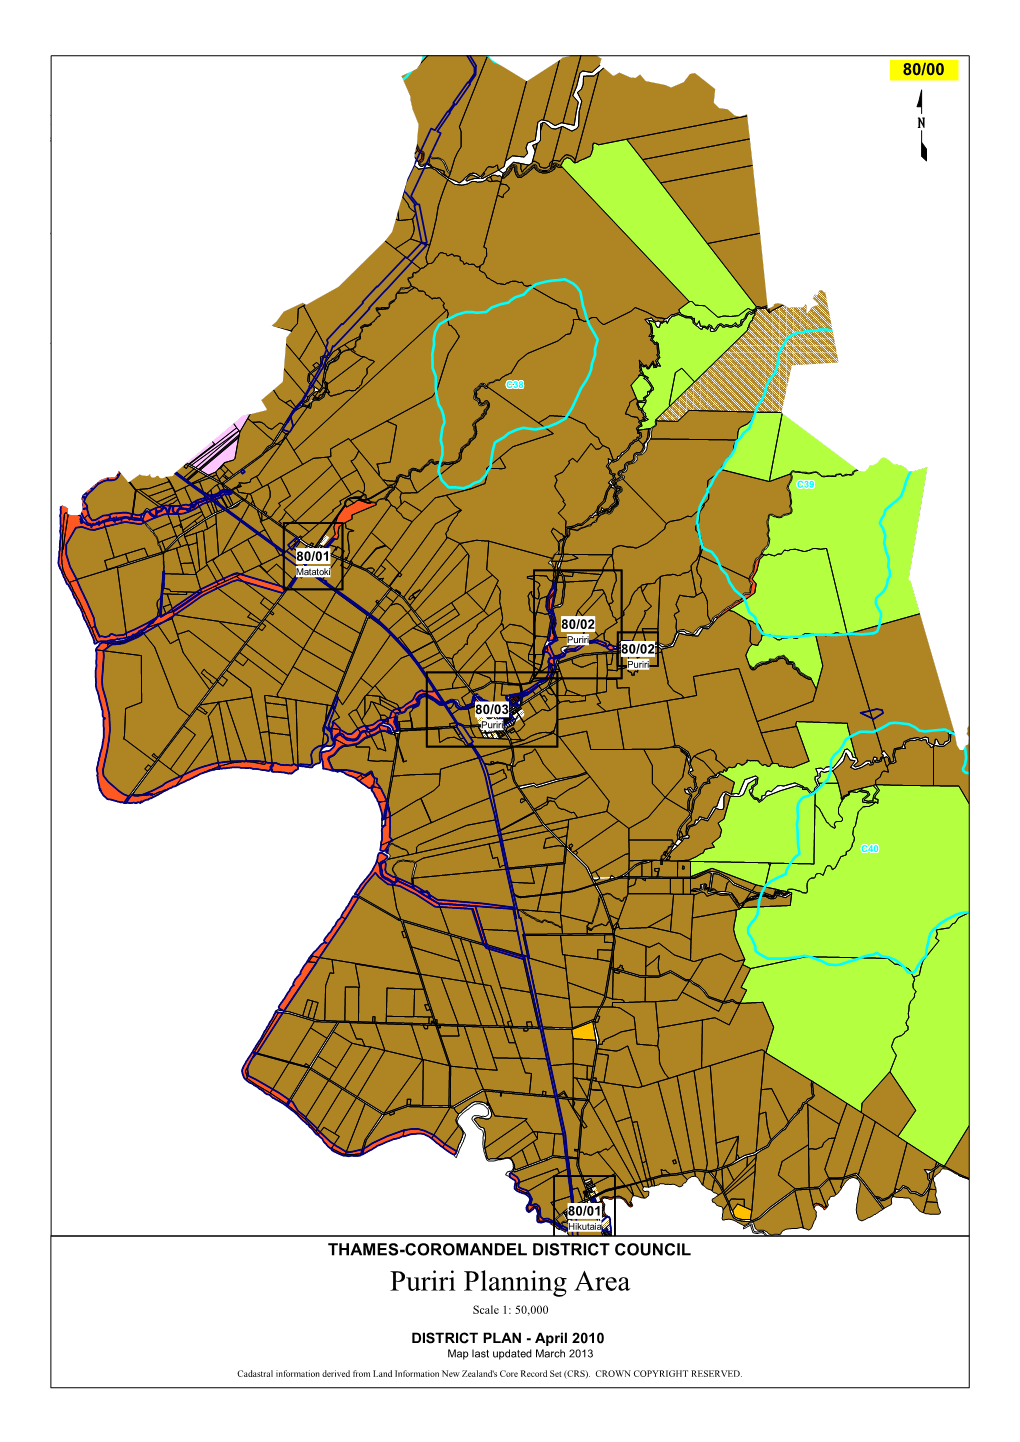 Puriri Planning Area Scale 1: 50,000